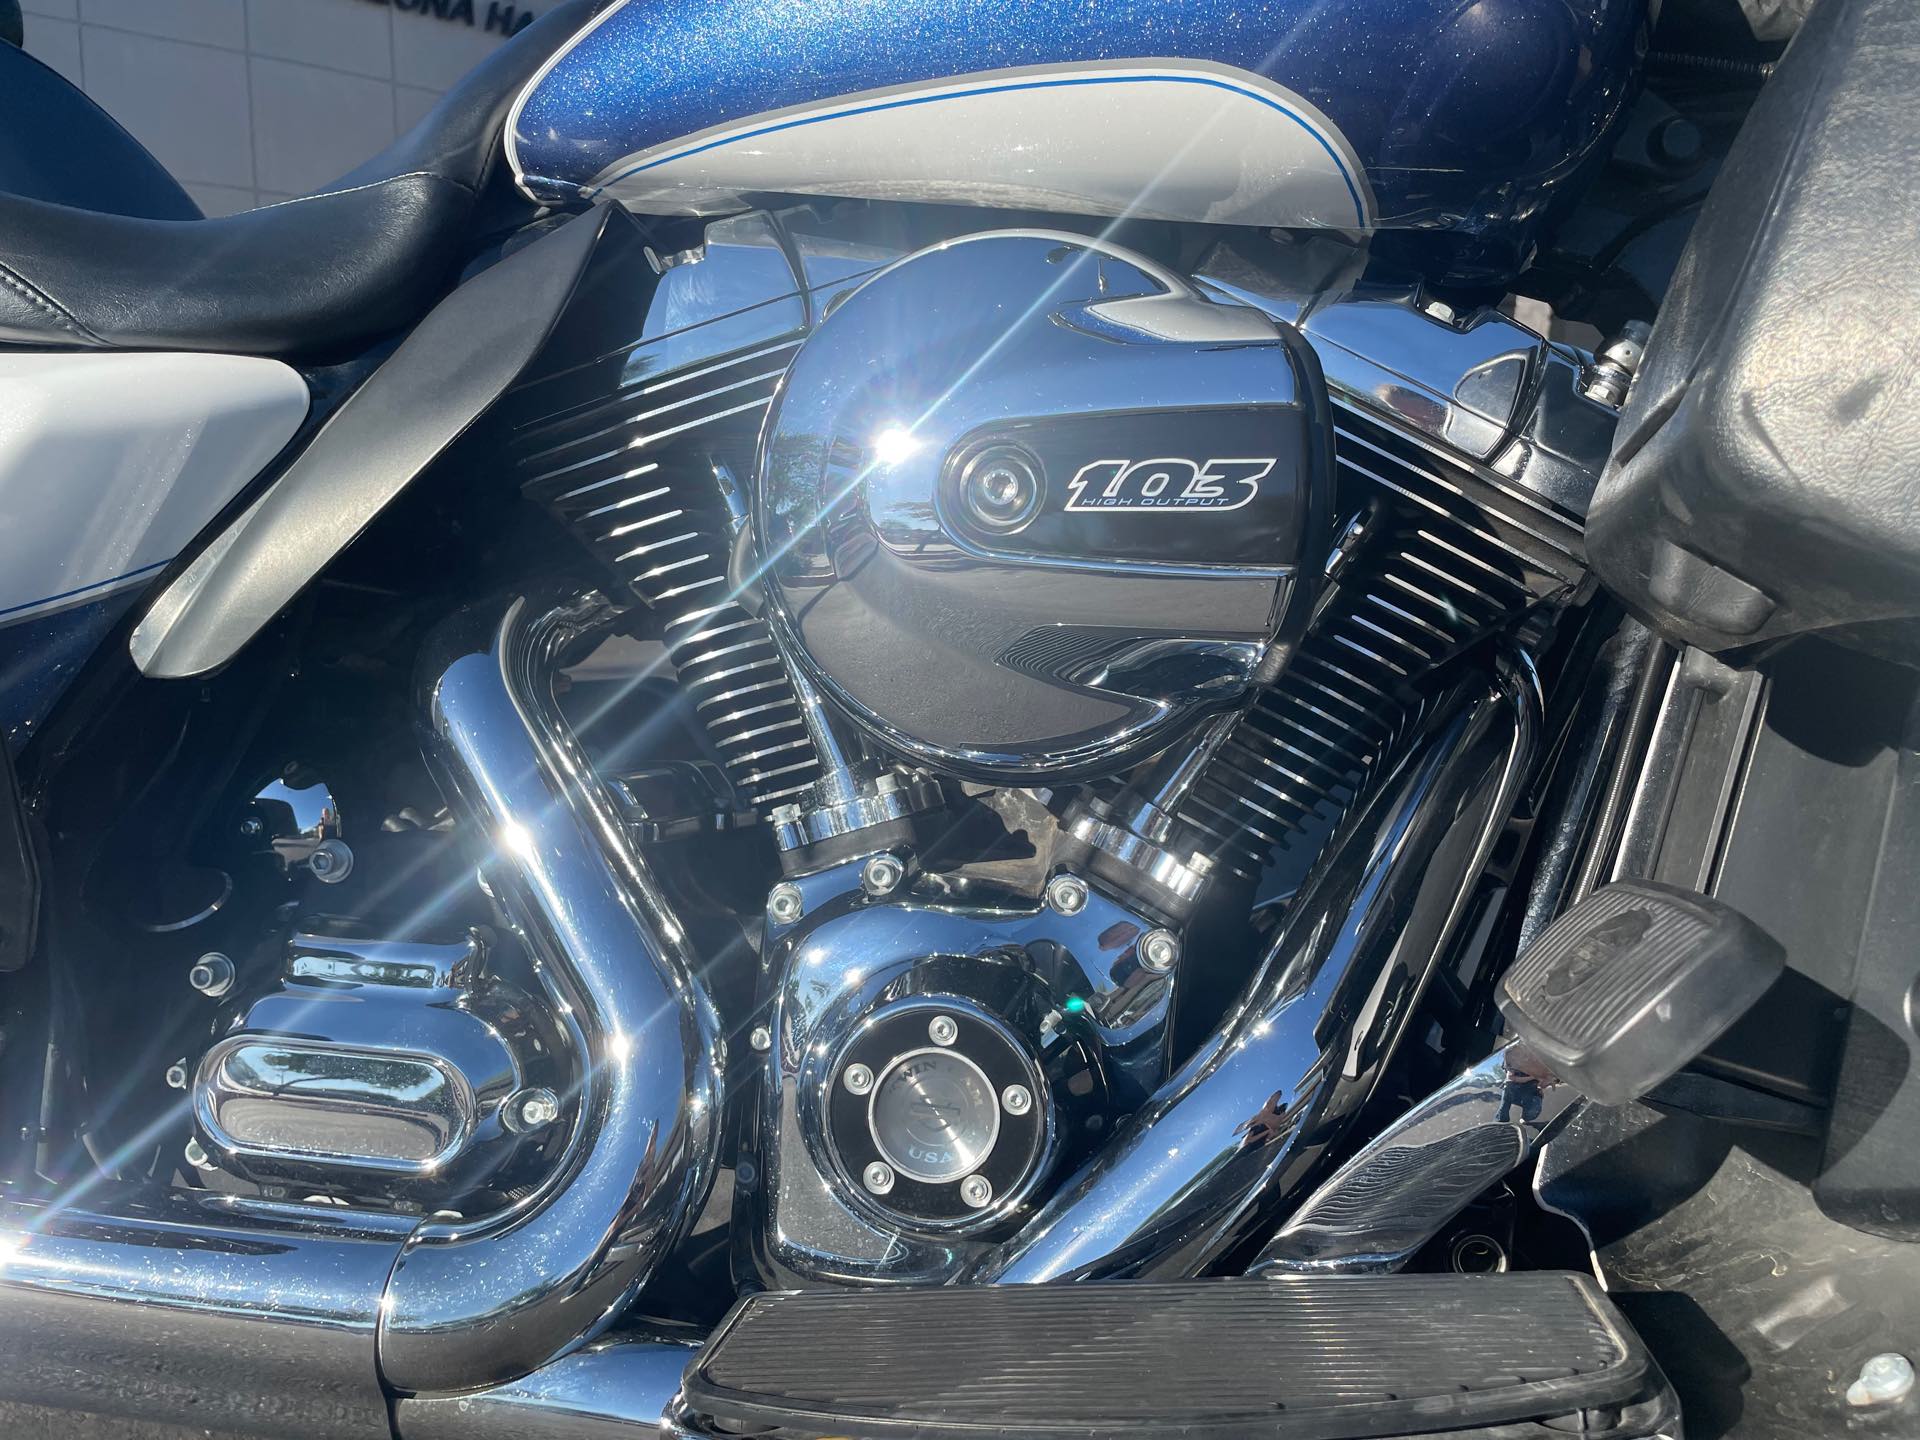 2015 Harley-Davidson Electra Glide Ultra Classic Low at Buddy Stubbs Arizona Harley-Davidson